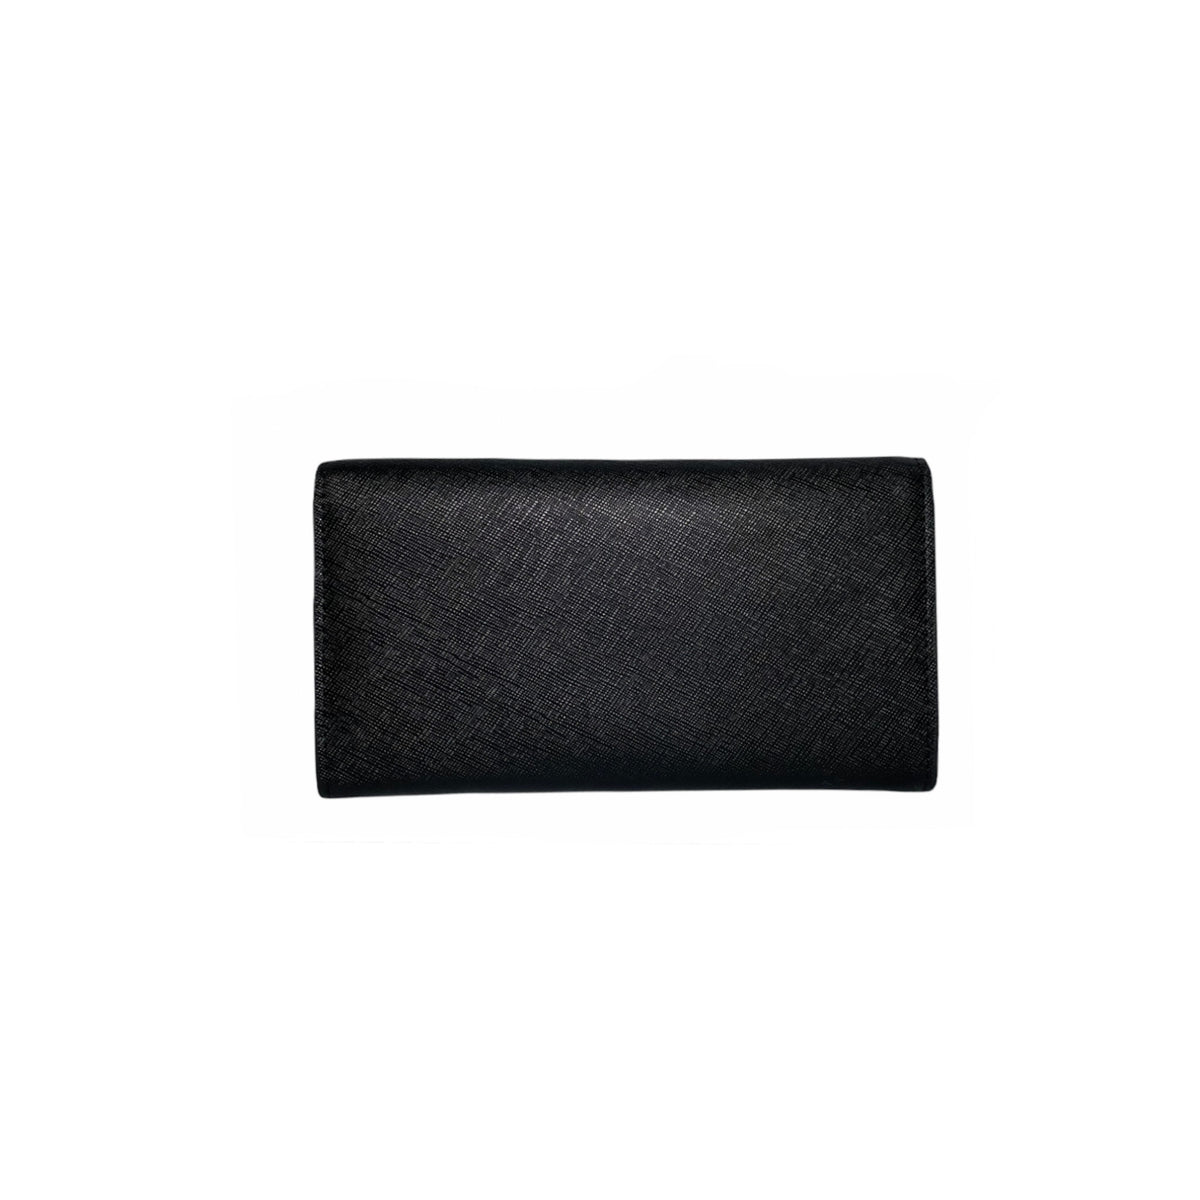 Personalised Purse - Black Saffiano Leather